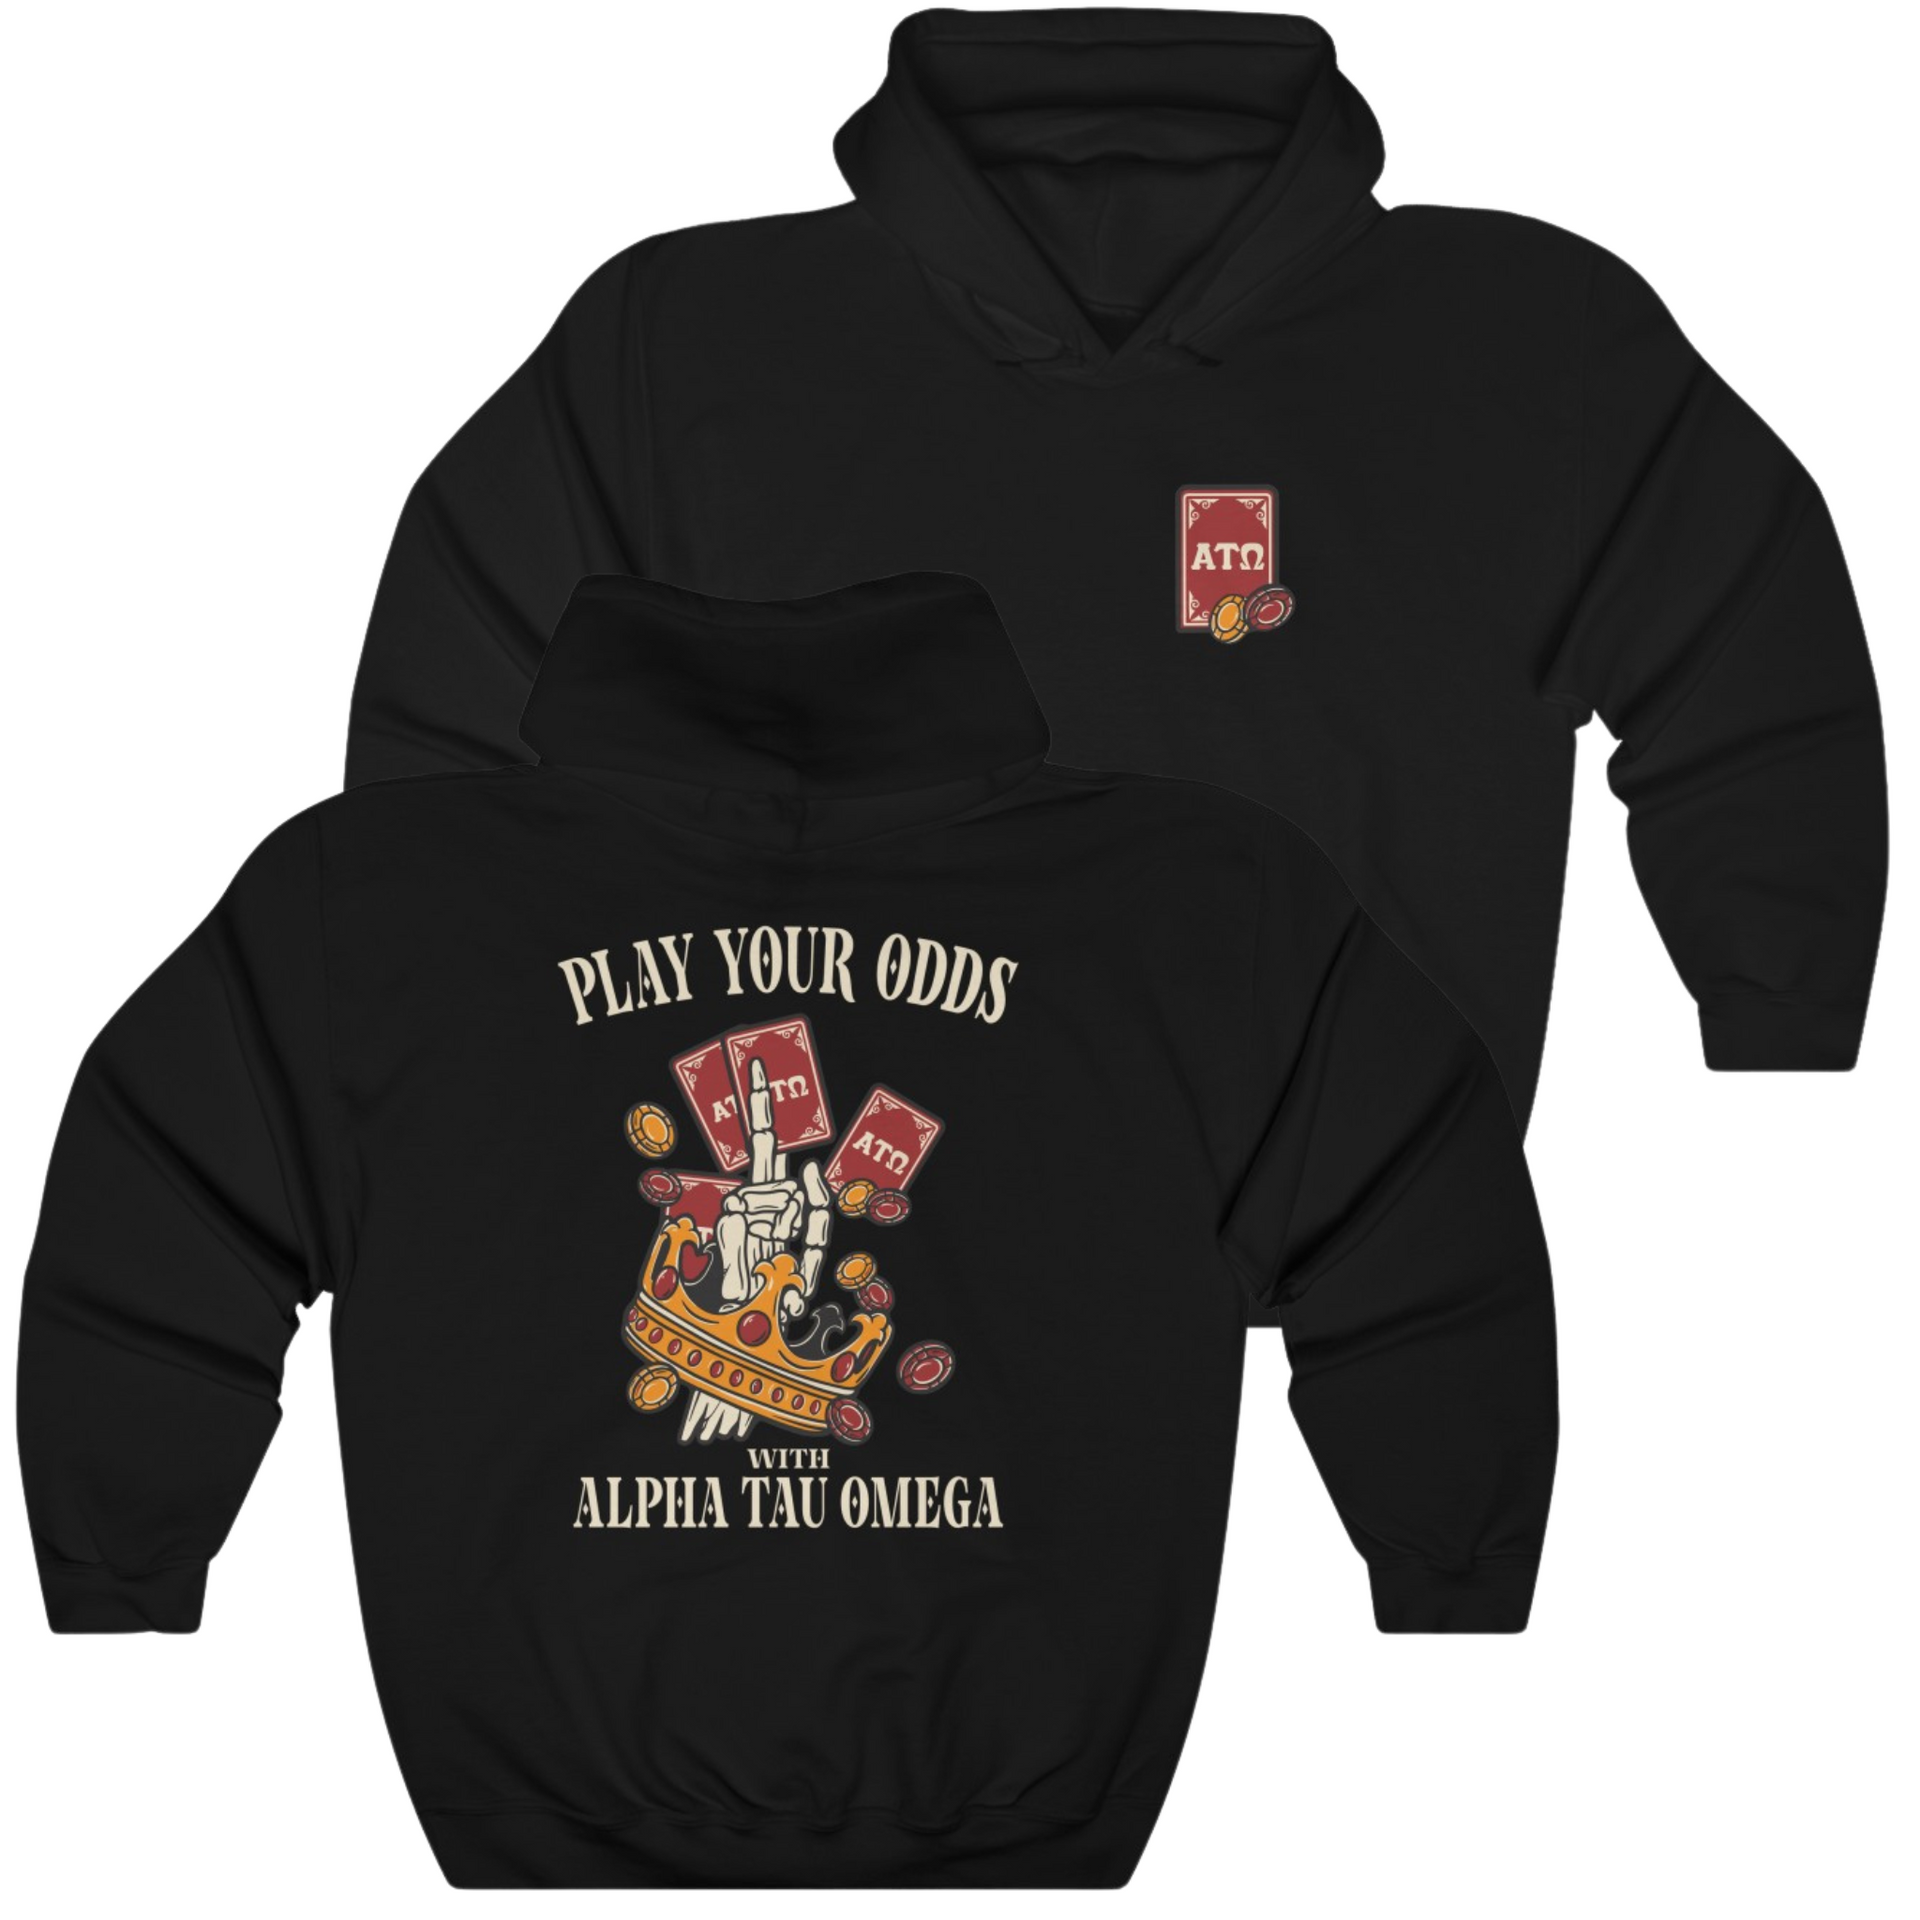 Black Alpha Tau Omega Graphic Hoodie | Play Your Odds | Alpha Tau Omega Fraternity Merchandise 